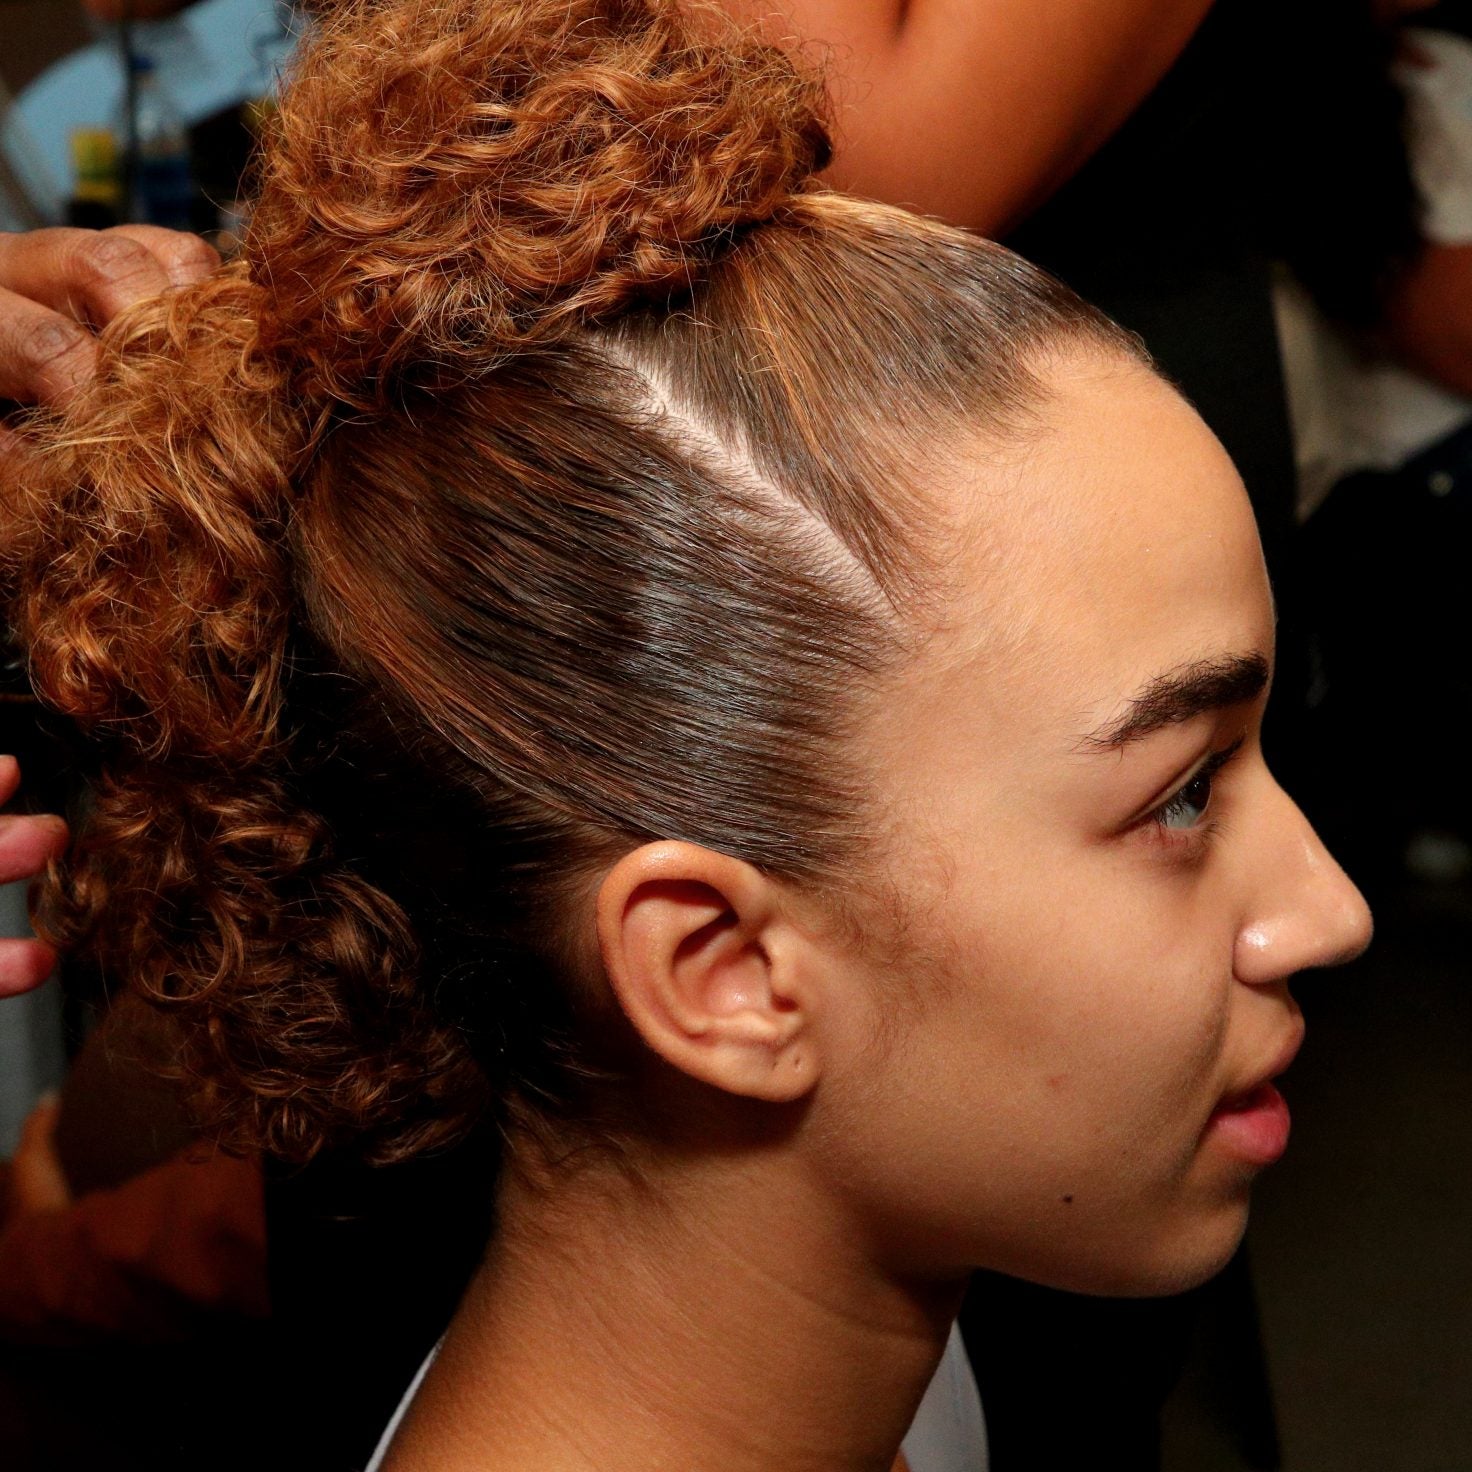 NYFW Get The Look: The Festival Hair At Chromat